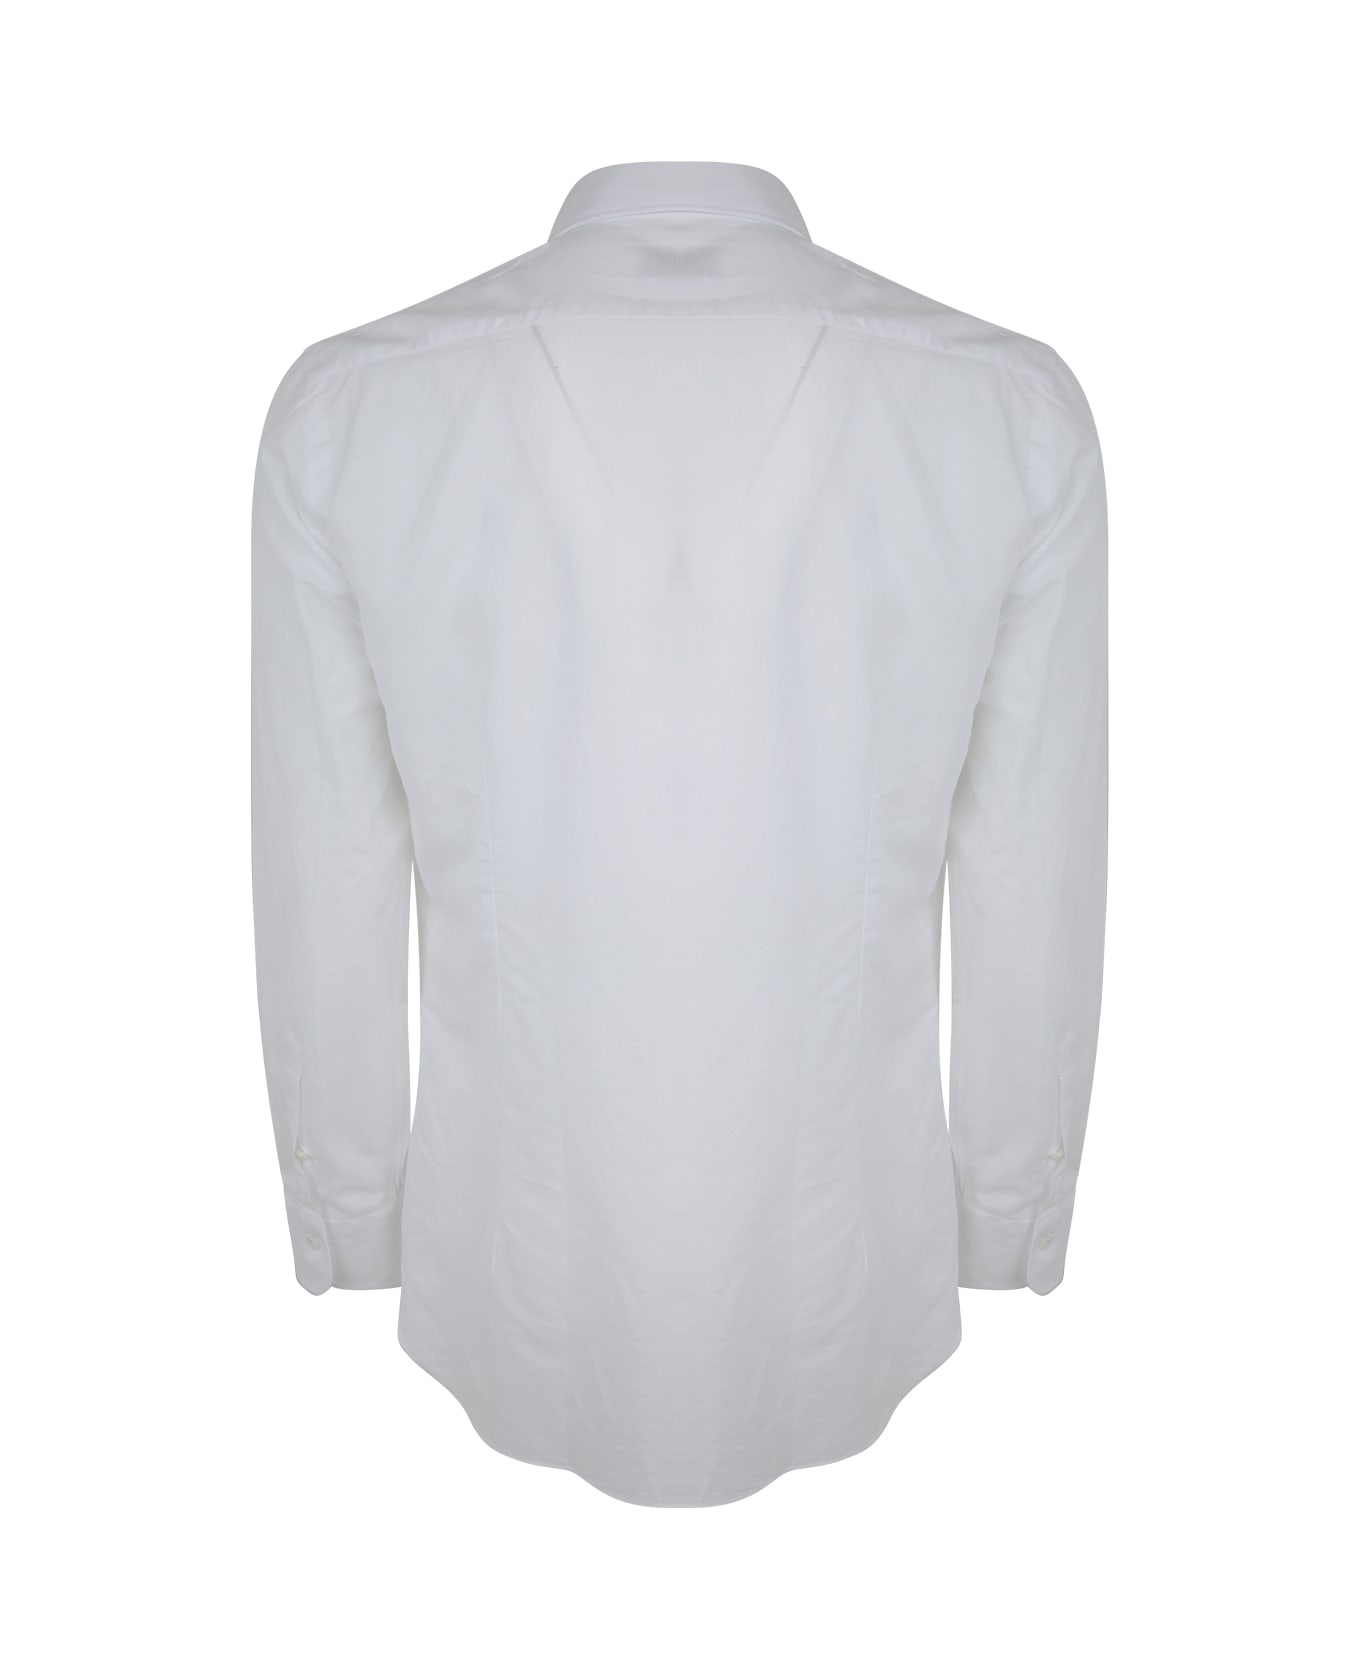 Barba Napoli Cotton And Linen Shirt - White シャツ